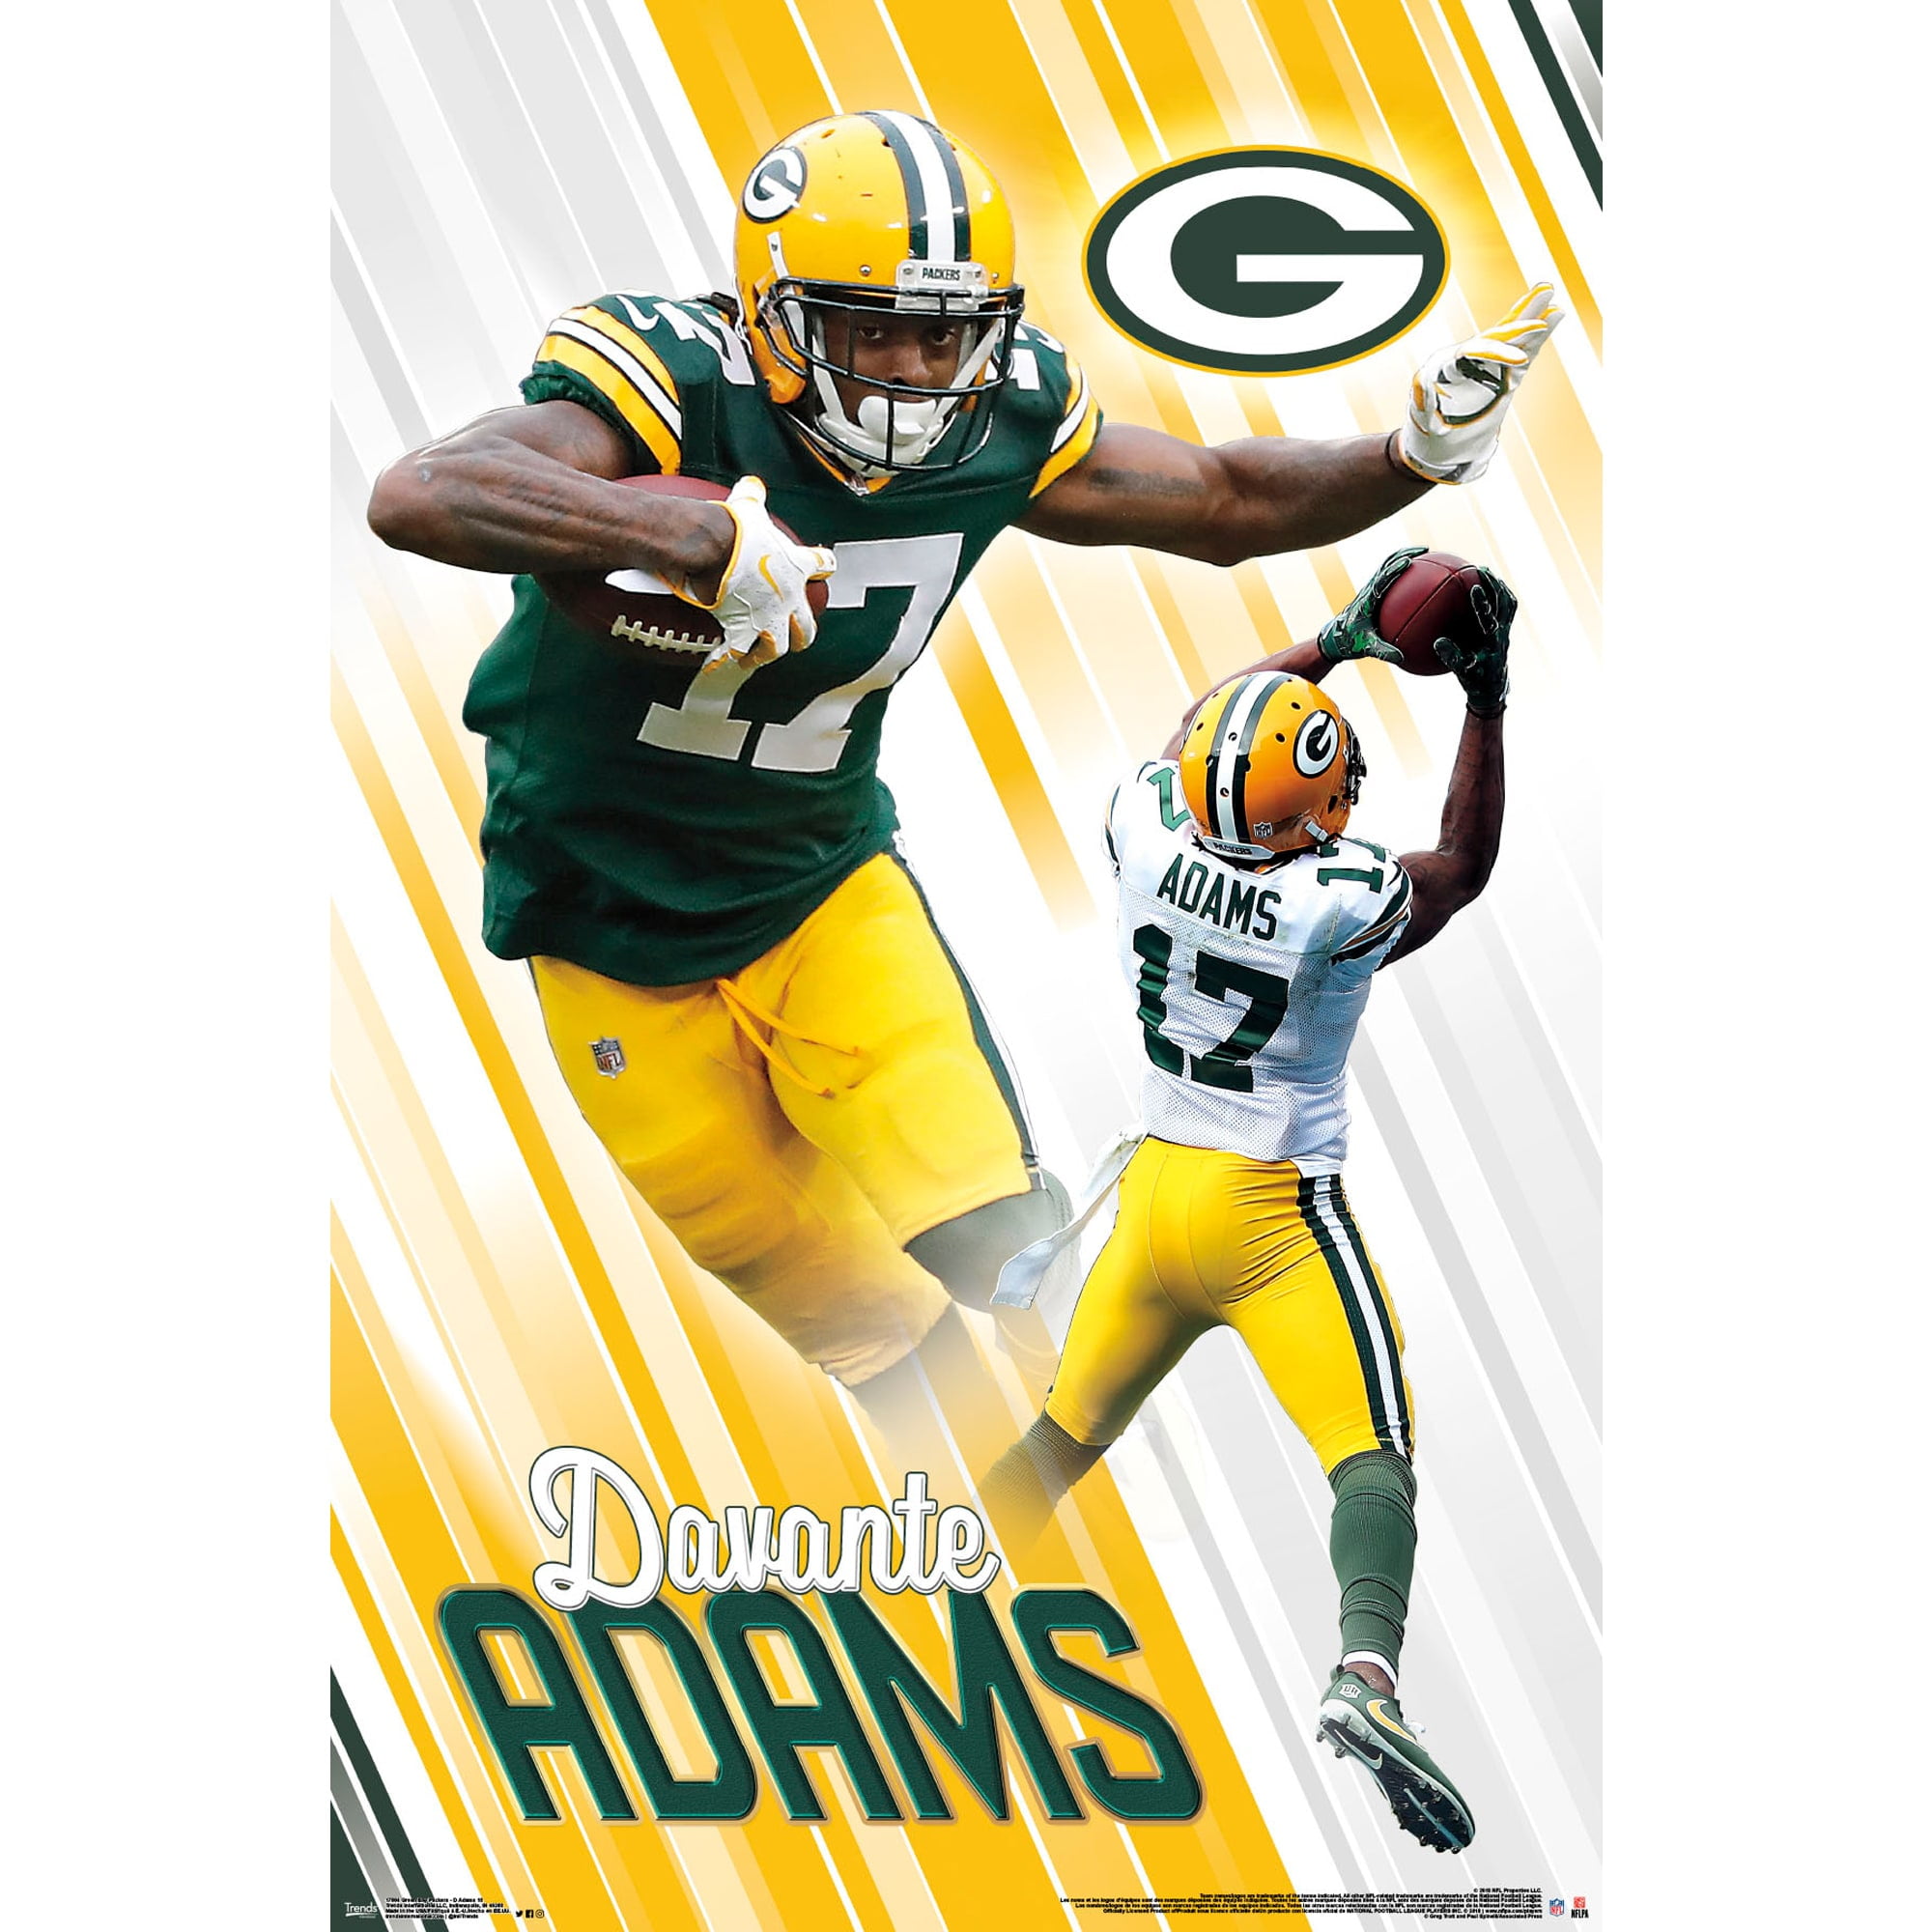 NFL Green Bay Packers - Davante Adams 18 Wall Poster, 22.375 x 34 